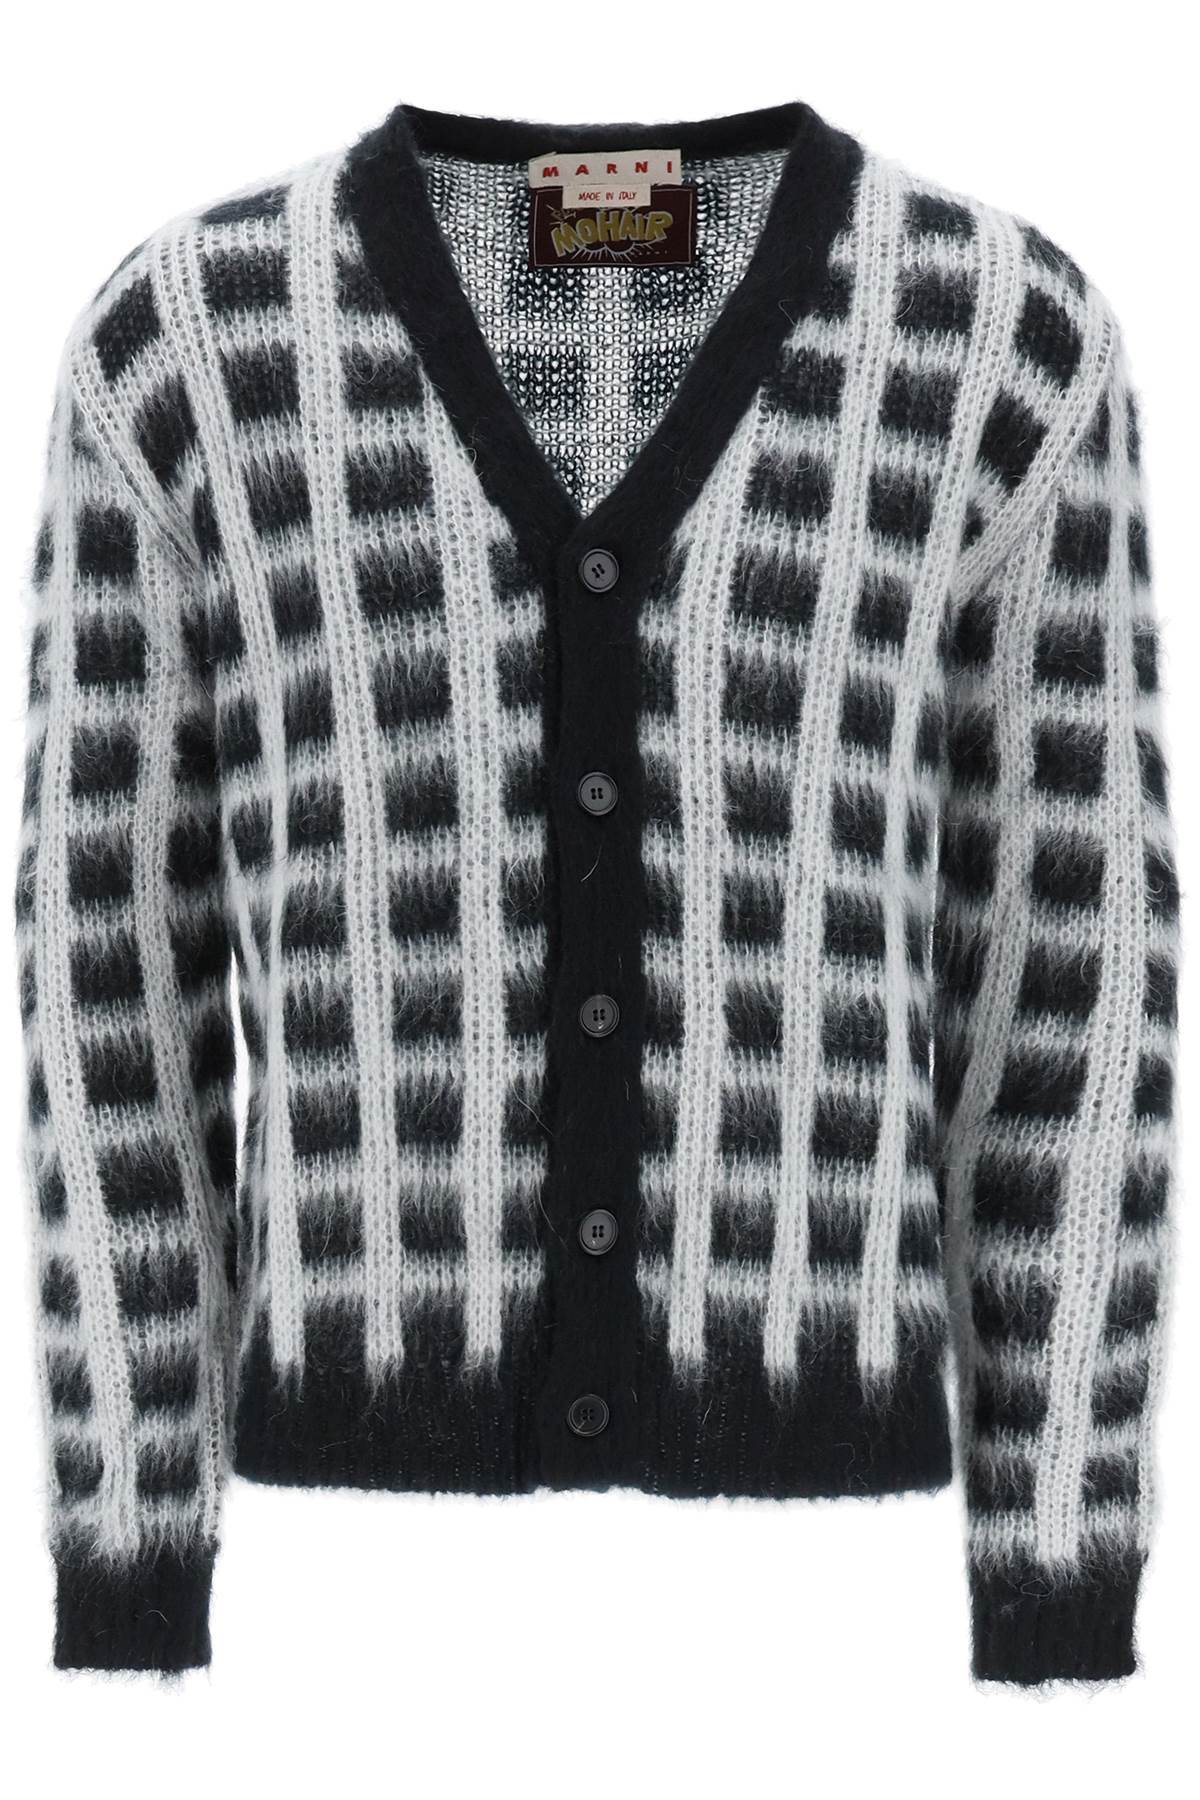 Marni brushed-yarn cardigan with check pattern-0